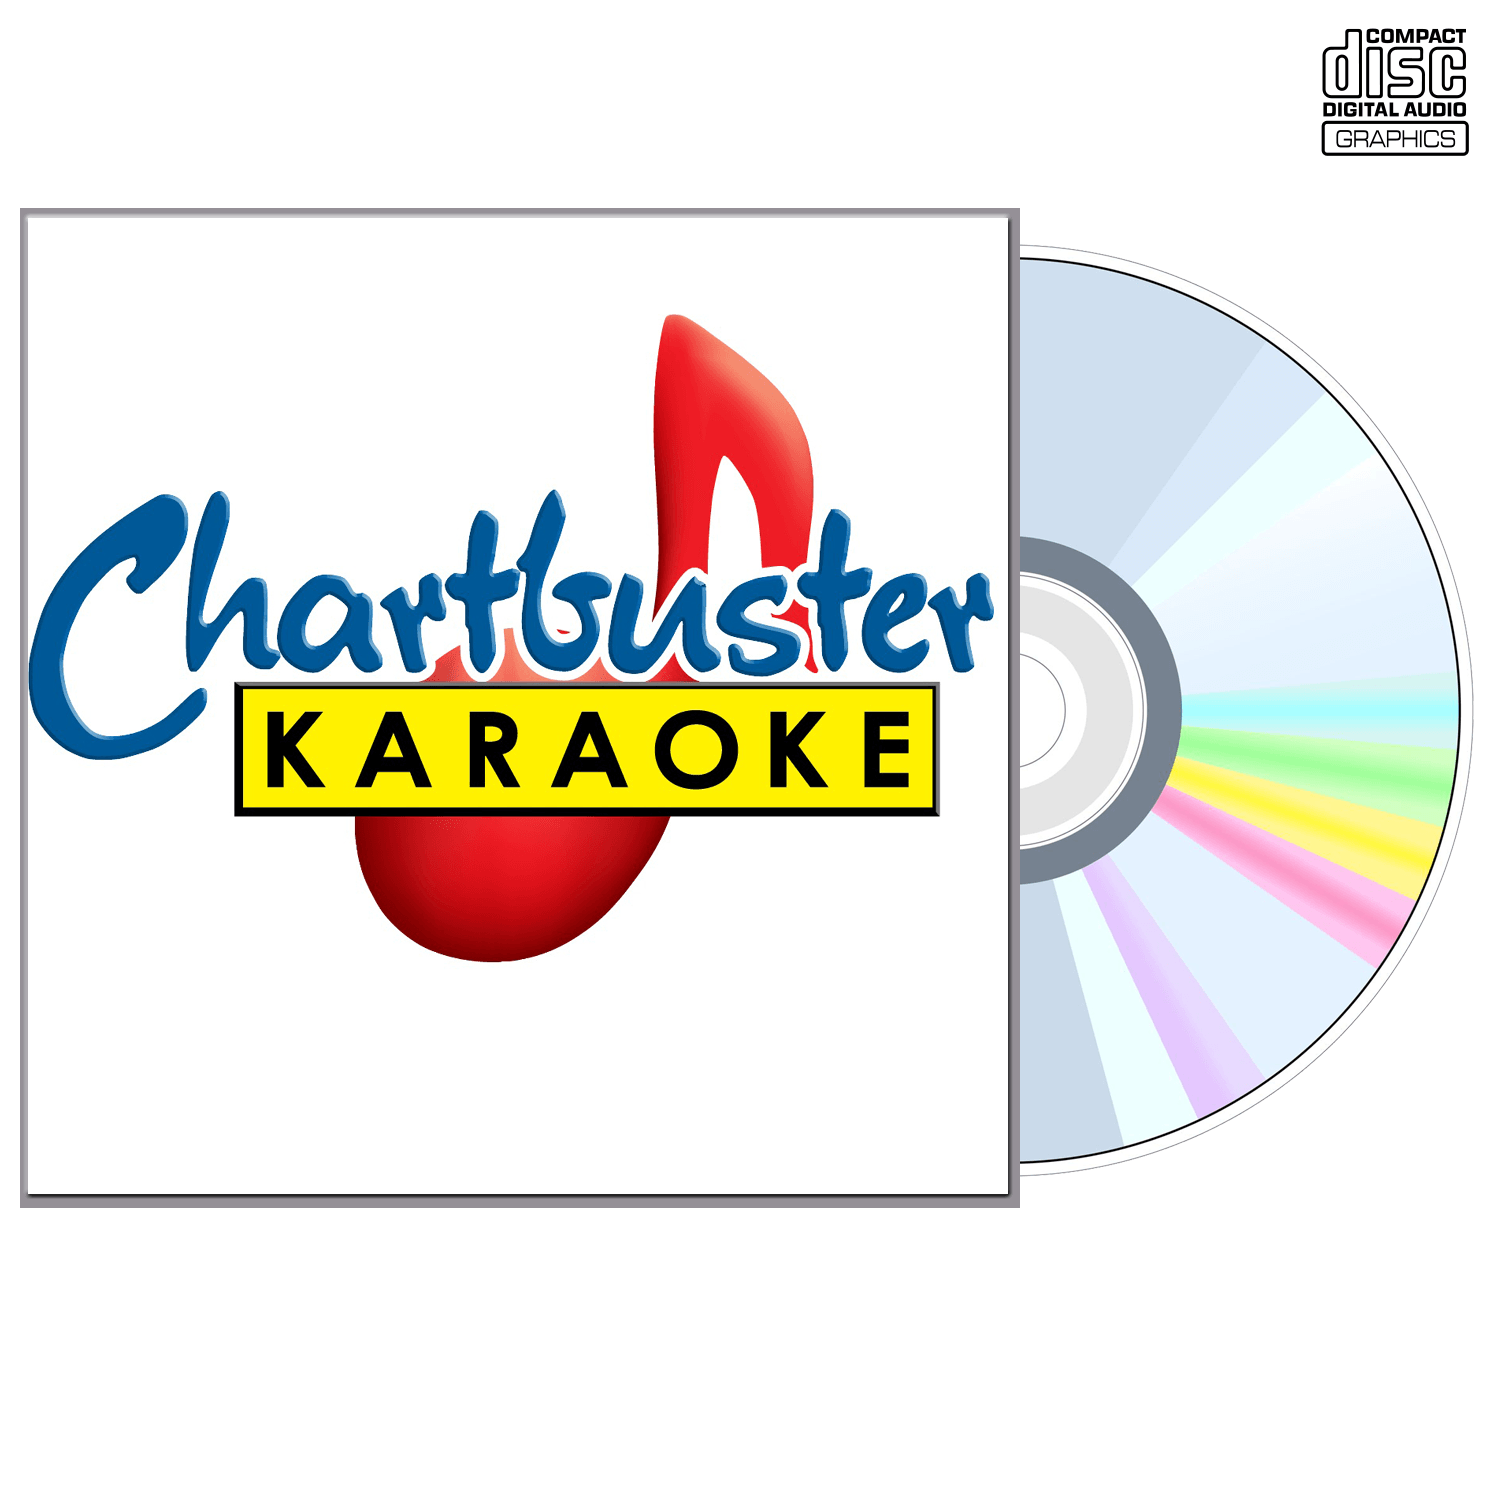 Trent Tomlinson - CD+G - Chartbuster Karaoke - Karaoke Home Entertainment